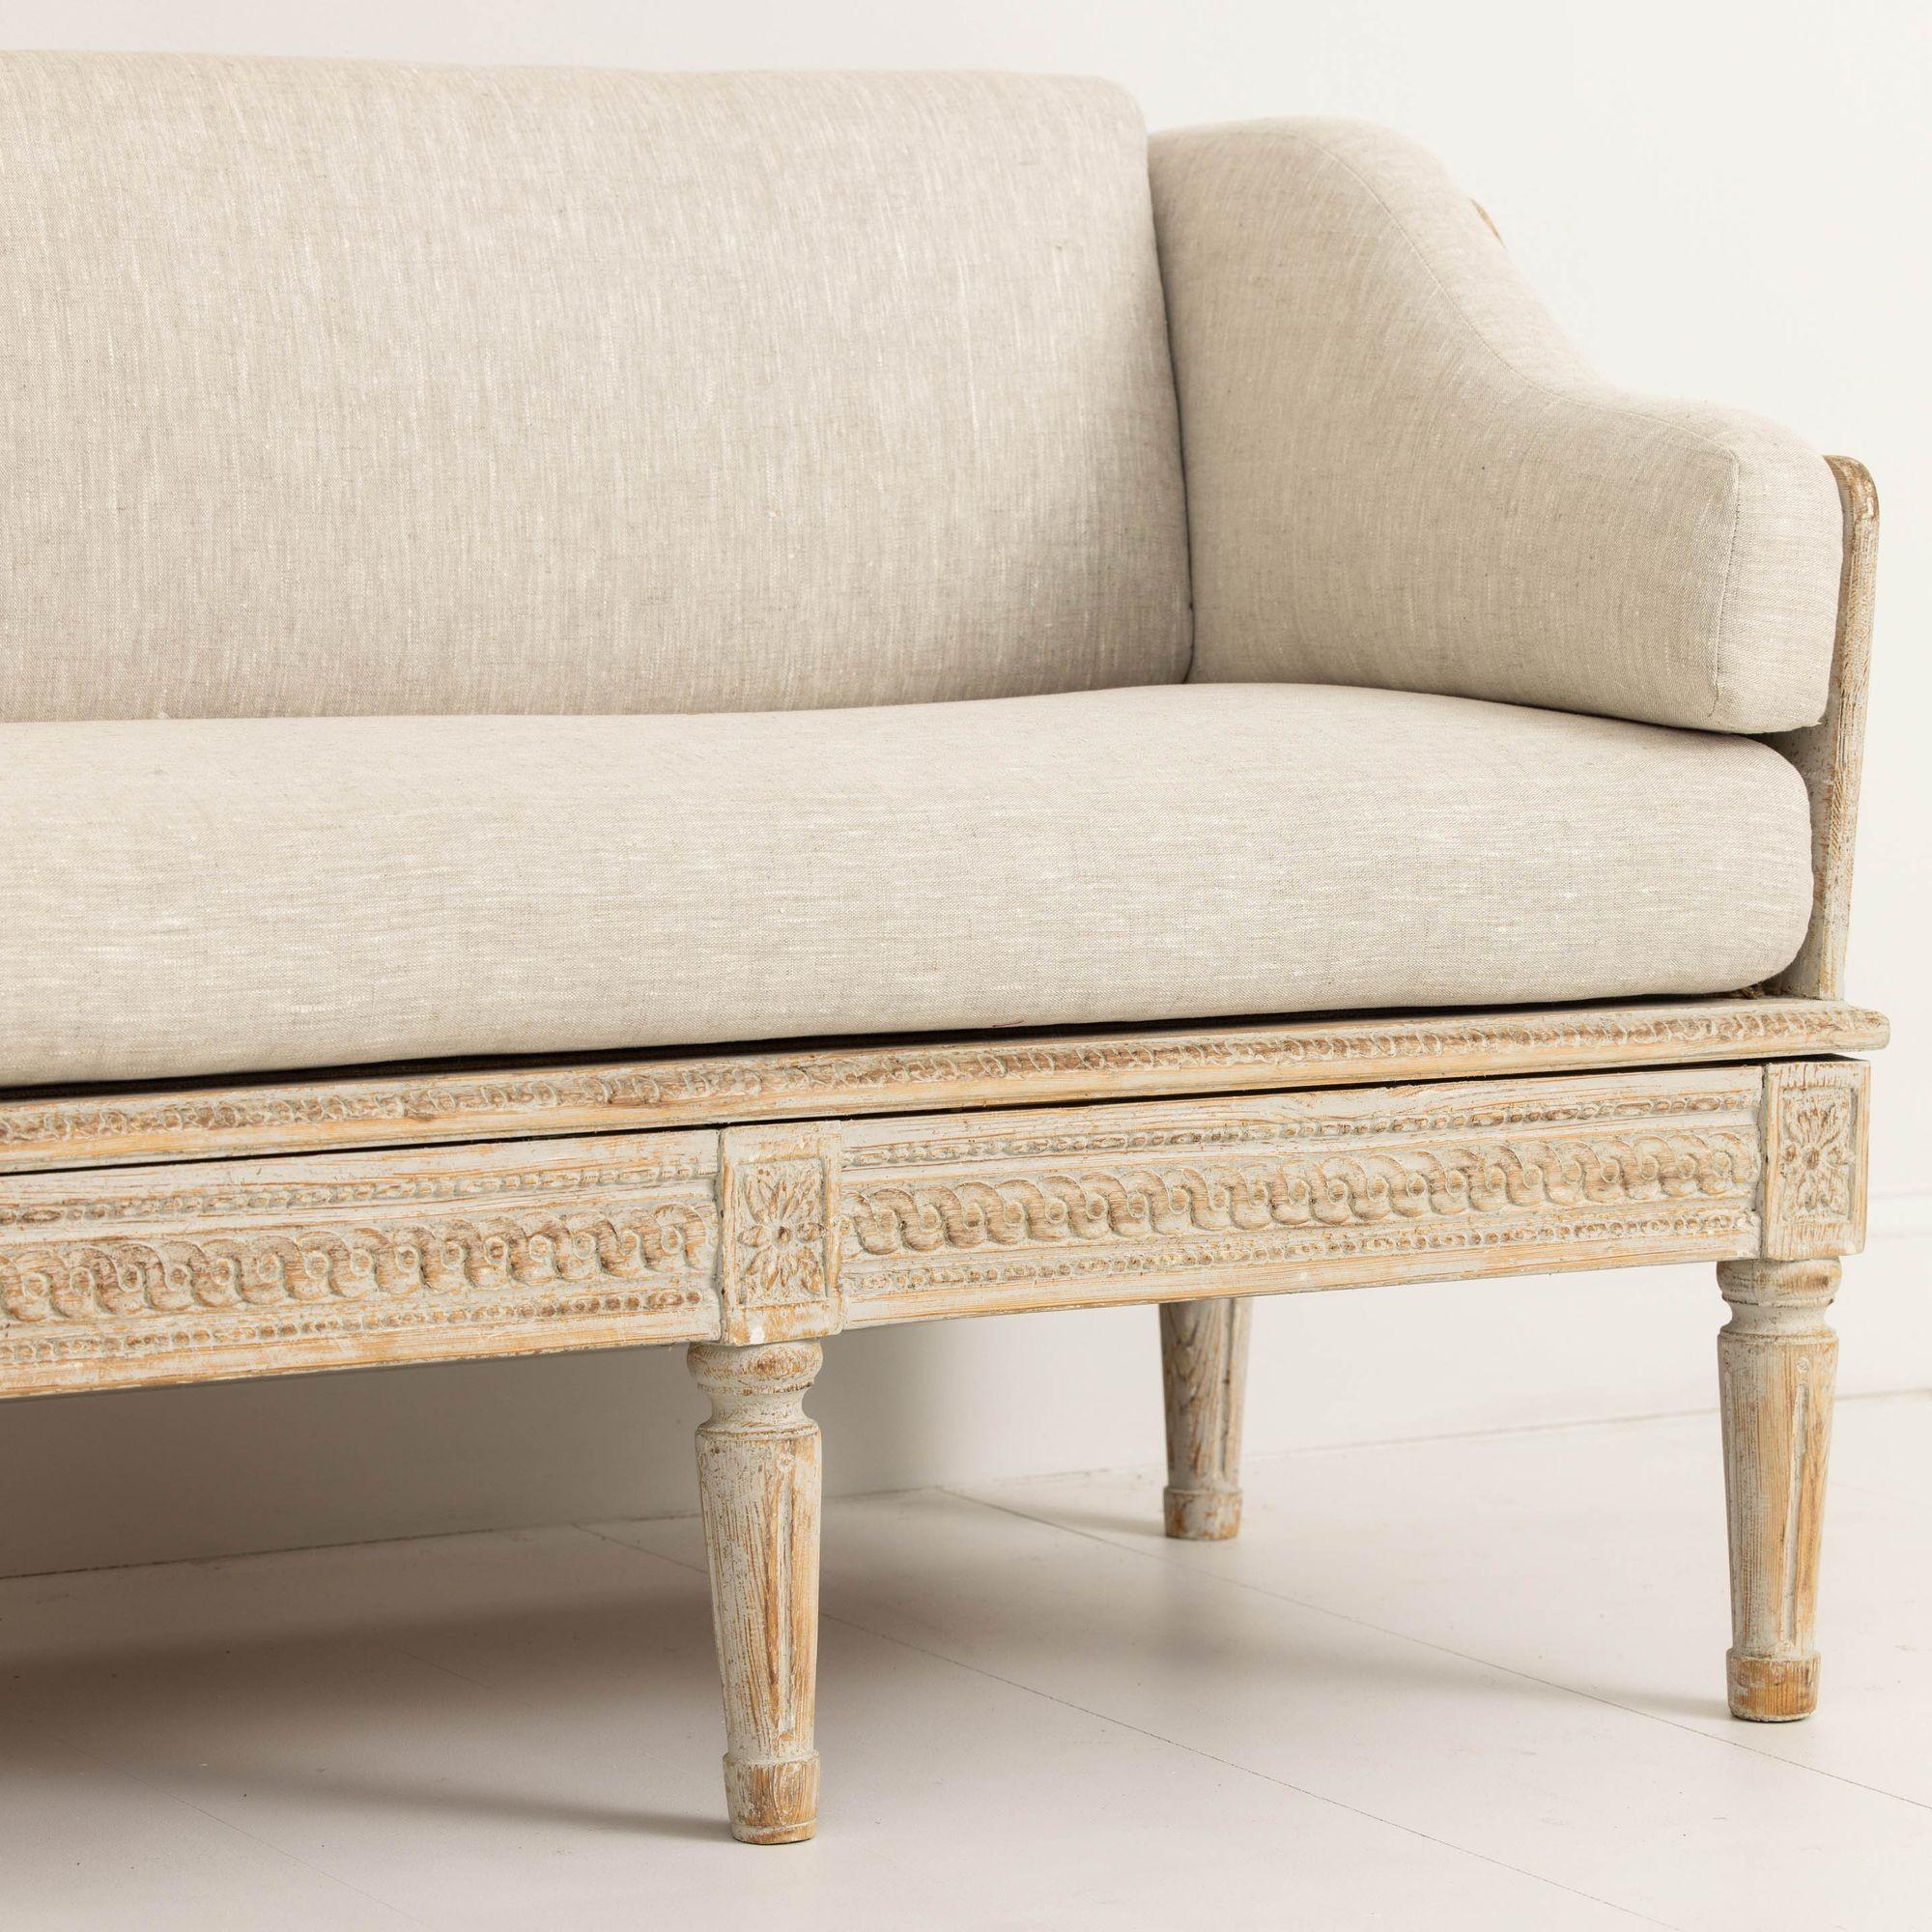 18th c. Swedish Gustavian Period Painted Sofa 'Trägsoffa' For Sale 6